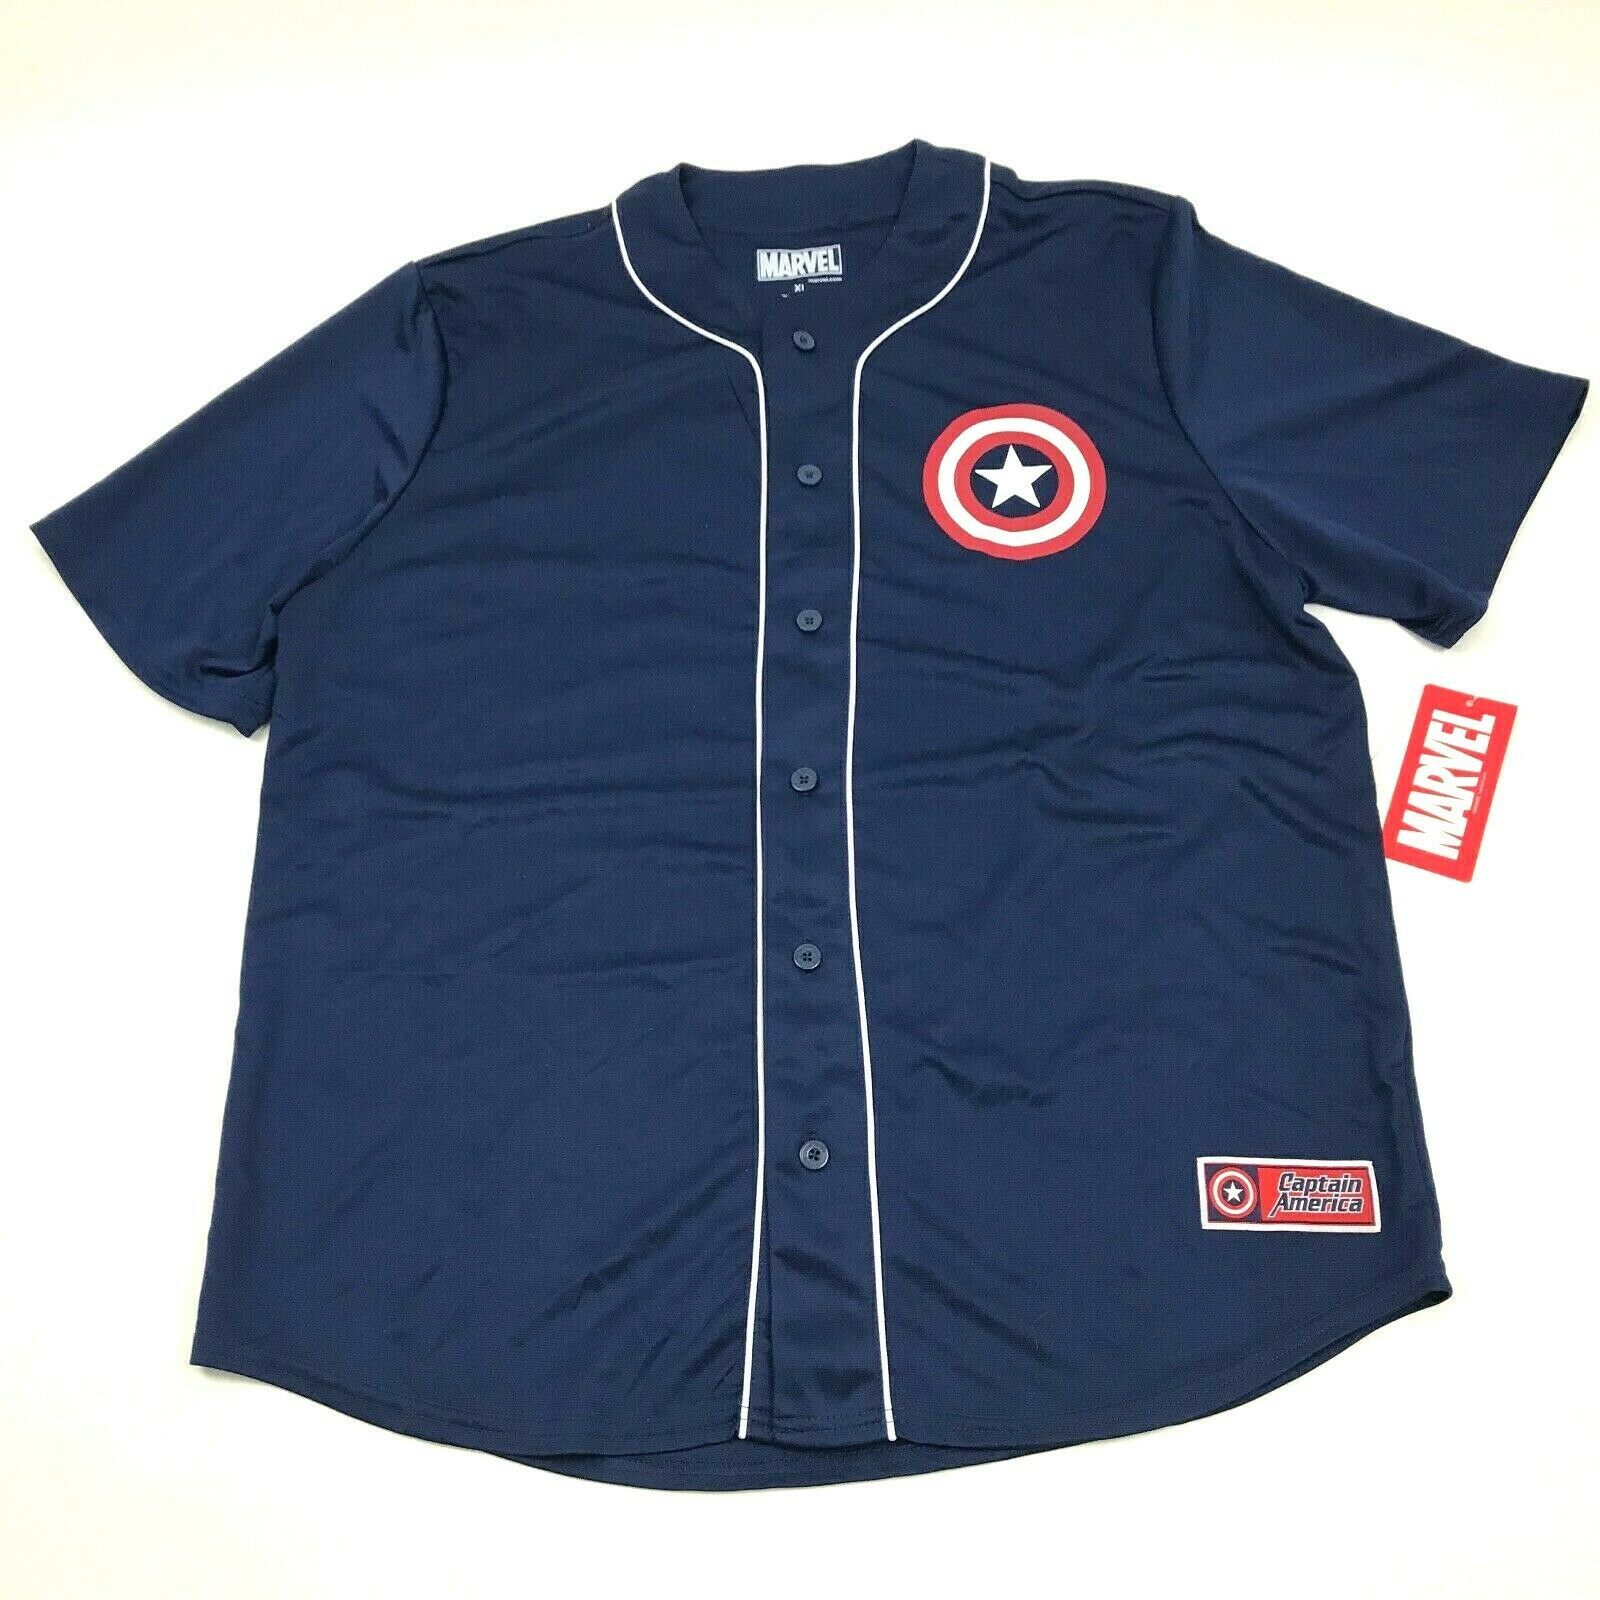 NEW Marvel Captain America Baseball Jersey Size Extra